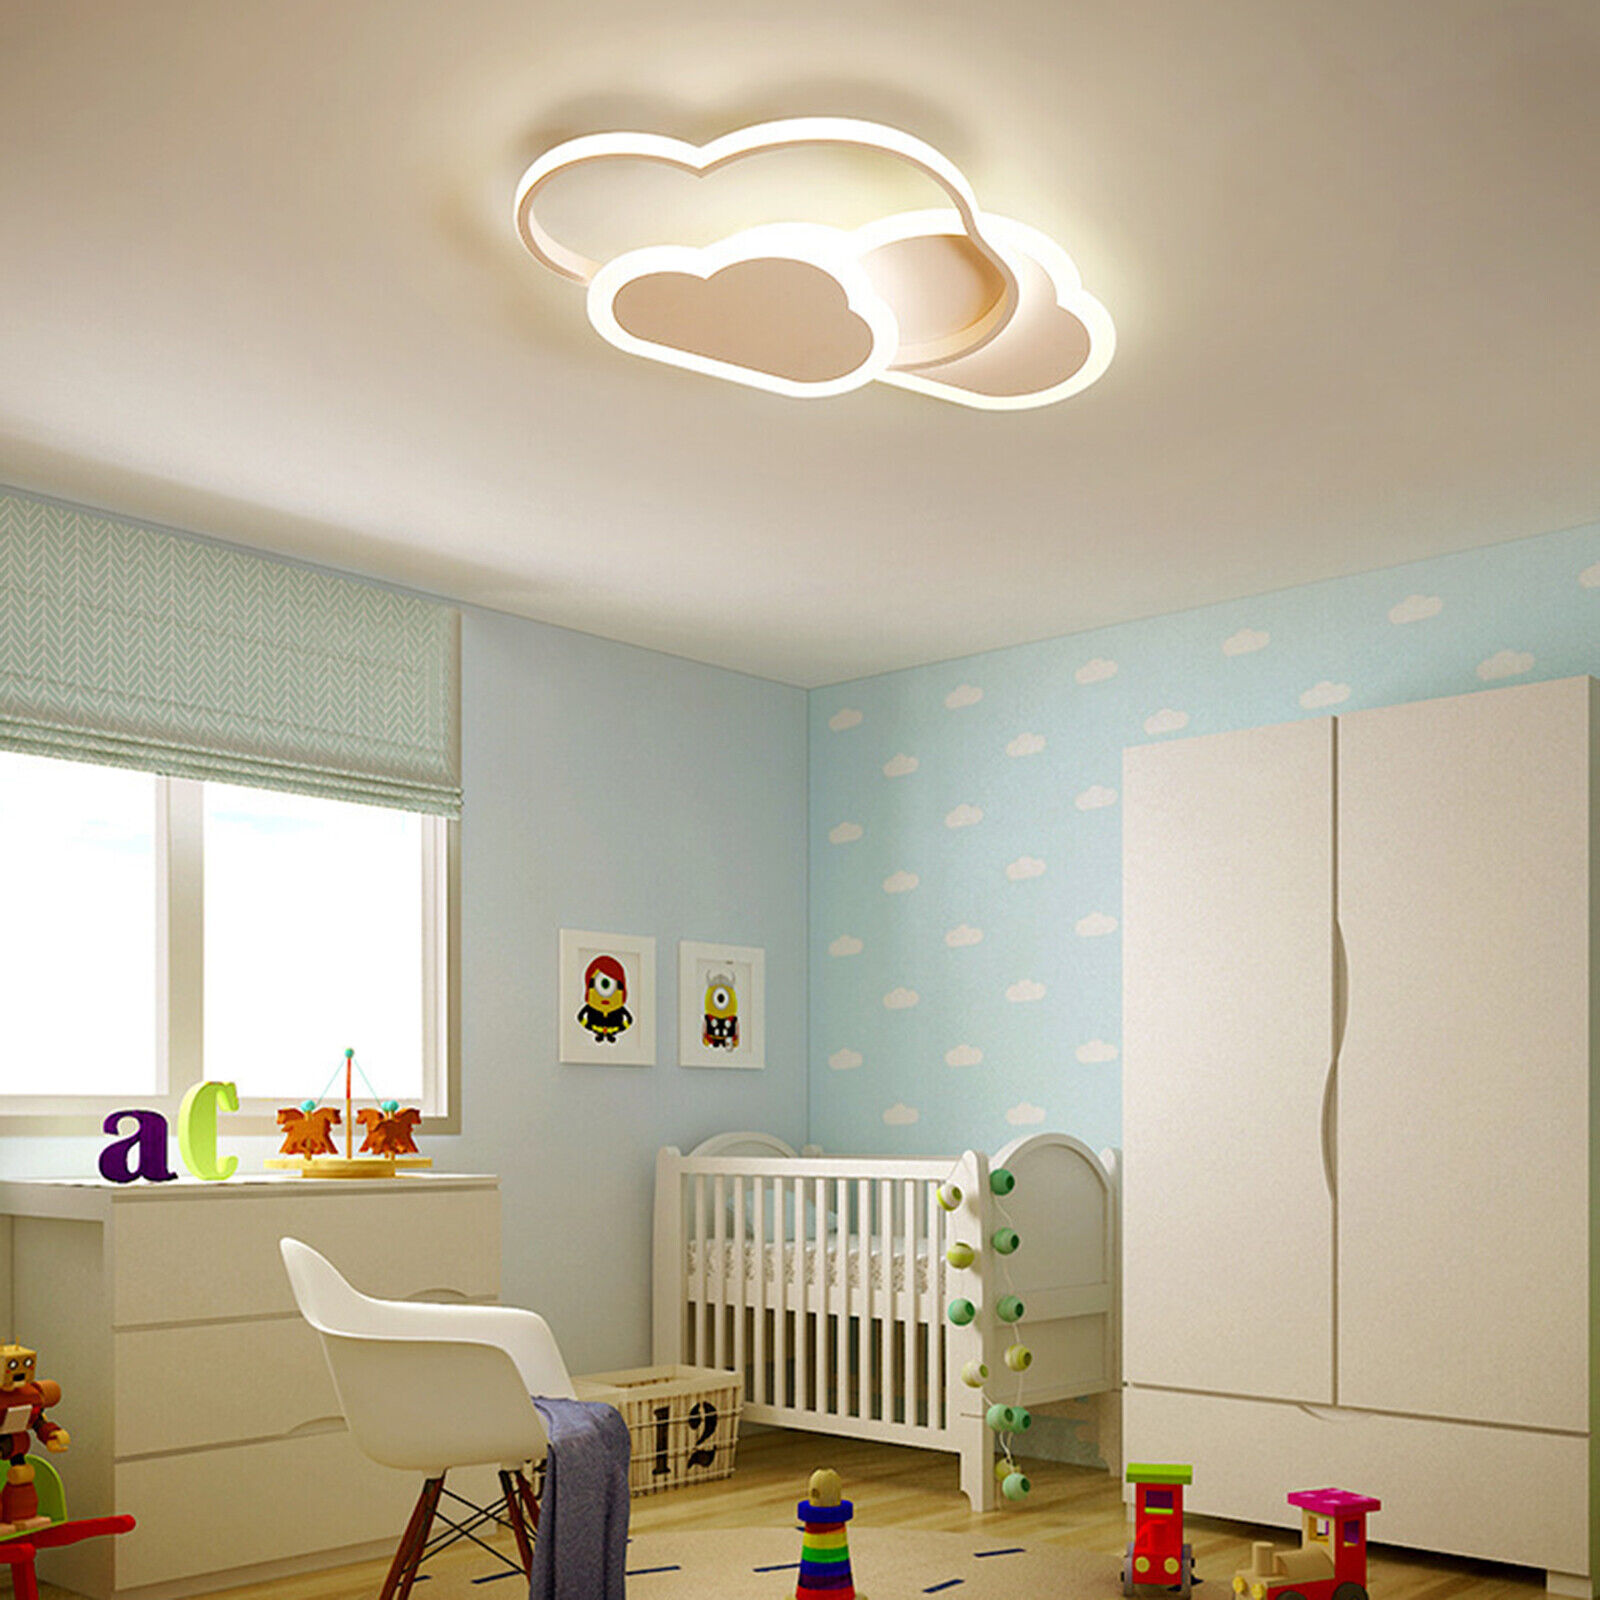 42W LED Ceiling Light 52*31*6cm Cloud Shape Modern Lamp Room Decor Light Fixture